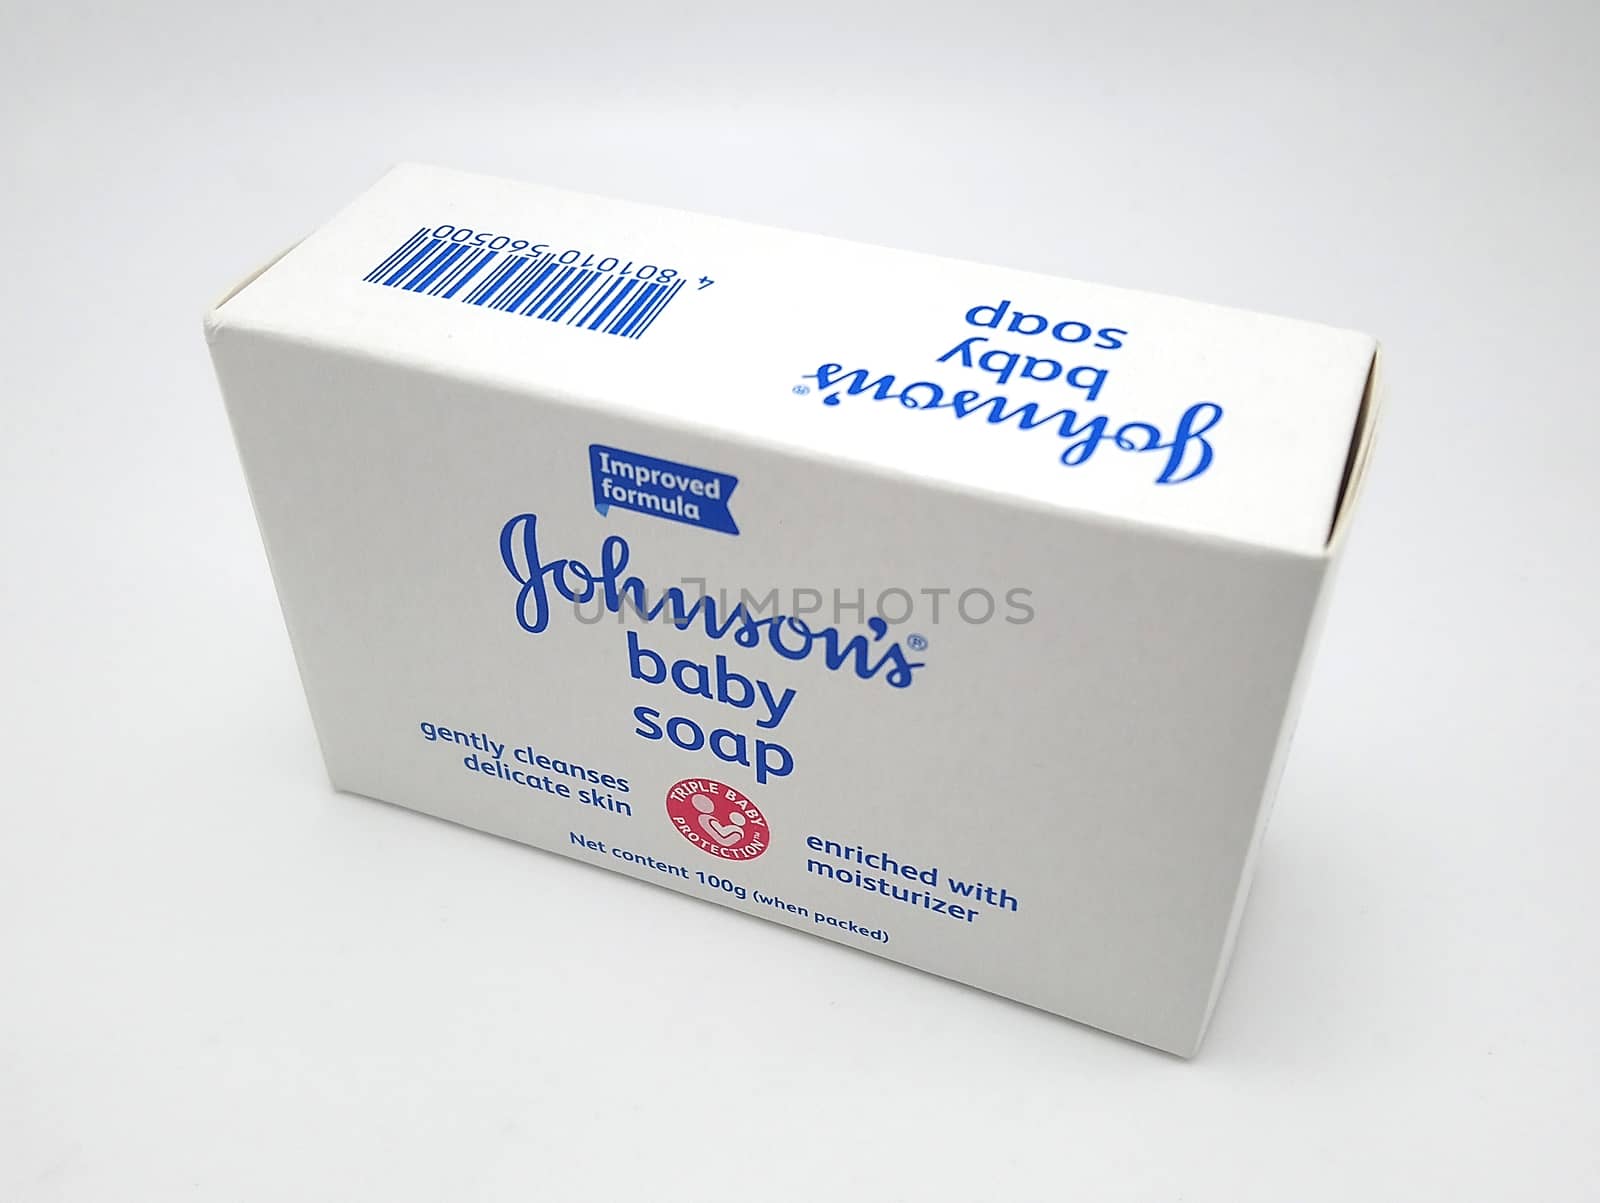 MANILA, PH - SEPT 25 - Johnsons baby soap box on September 25, 2020 in Manila, Philippines.